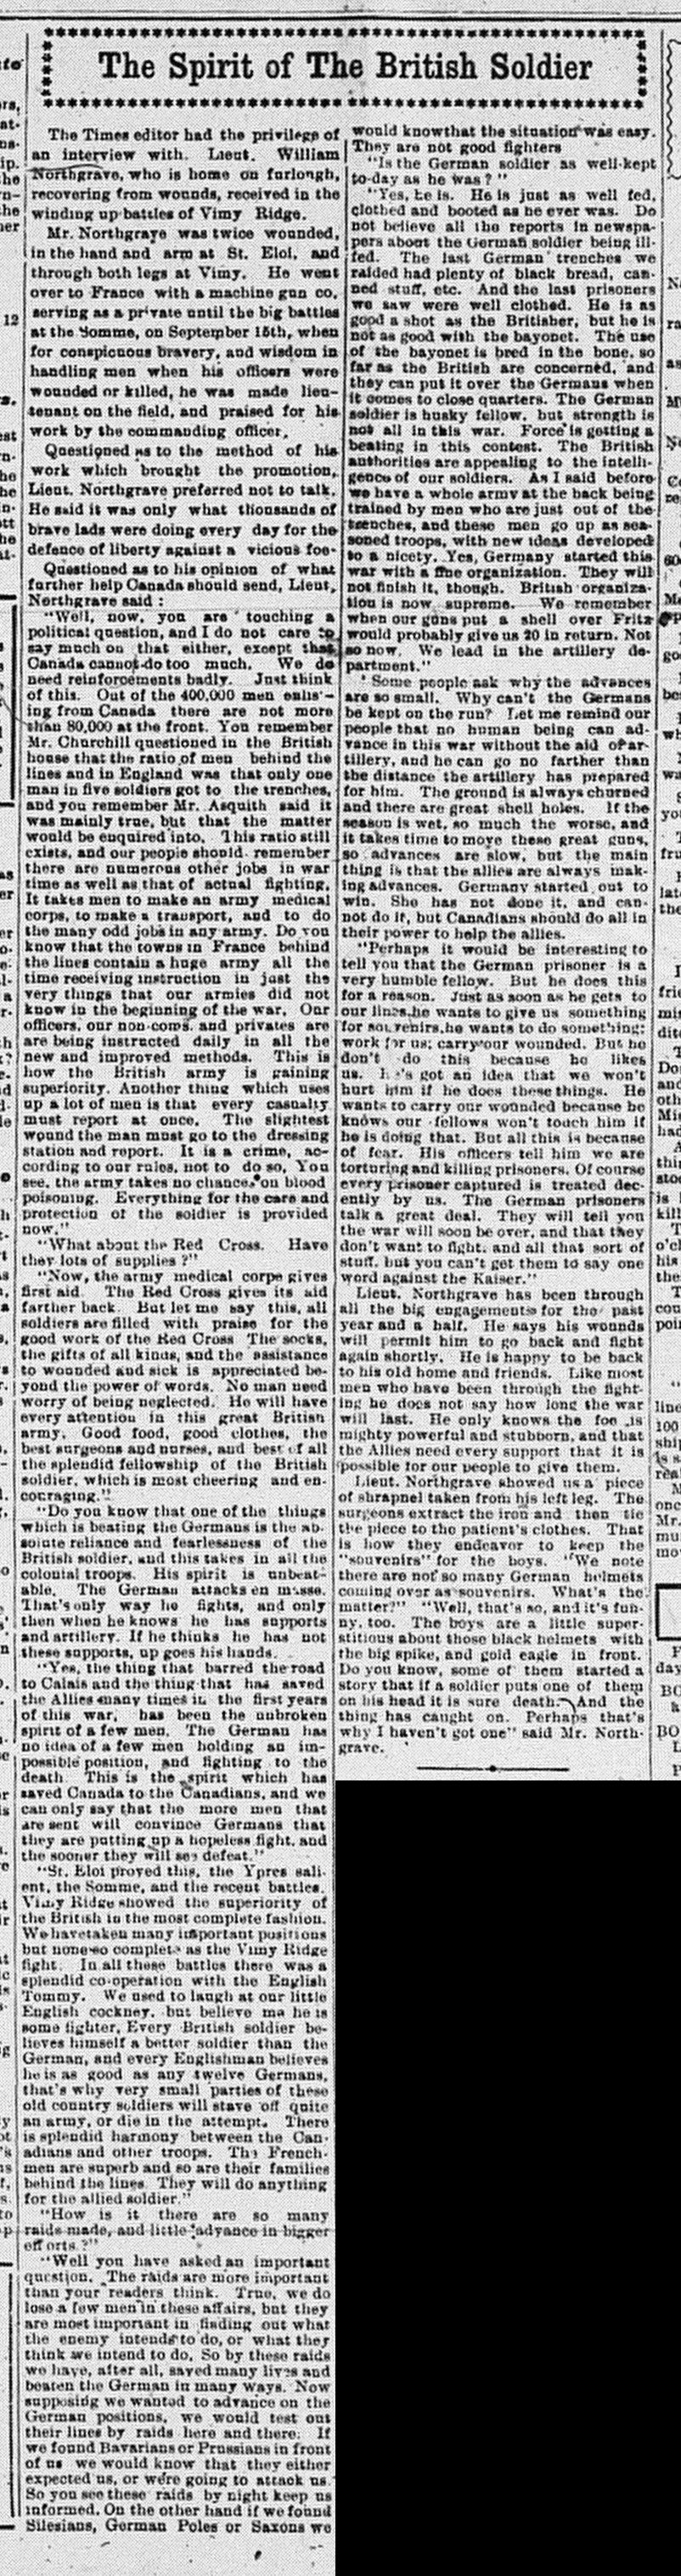 Port Elgin Times, August 15, 1917, p.1